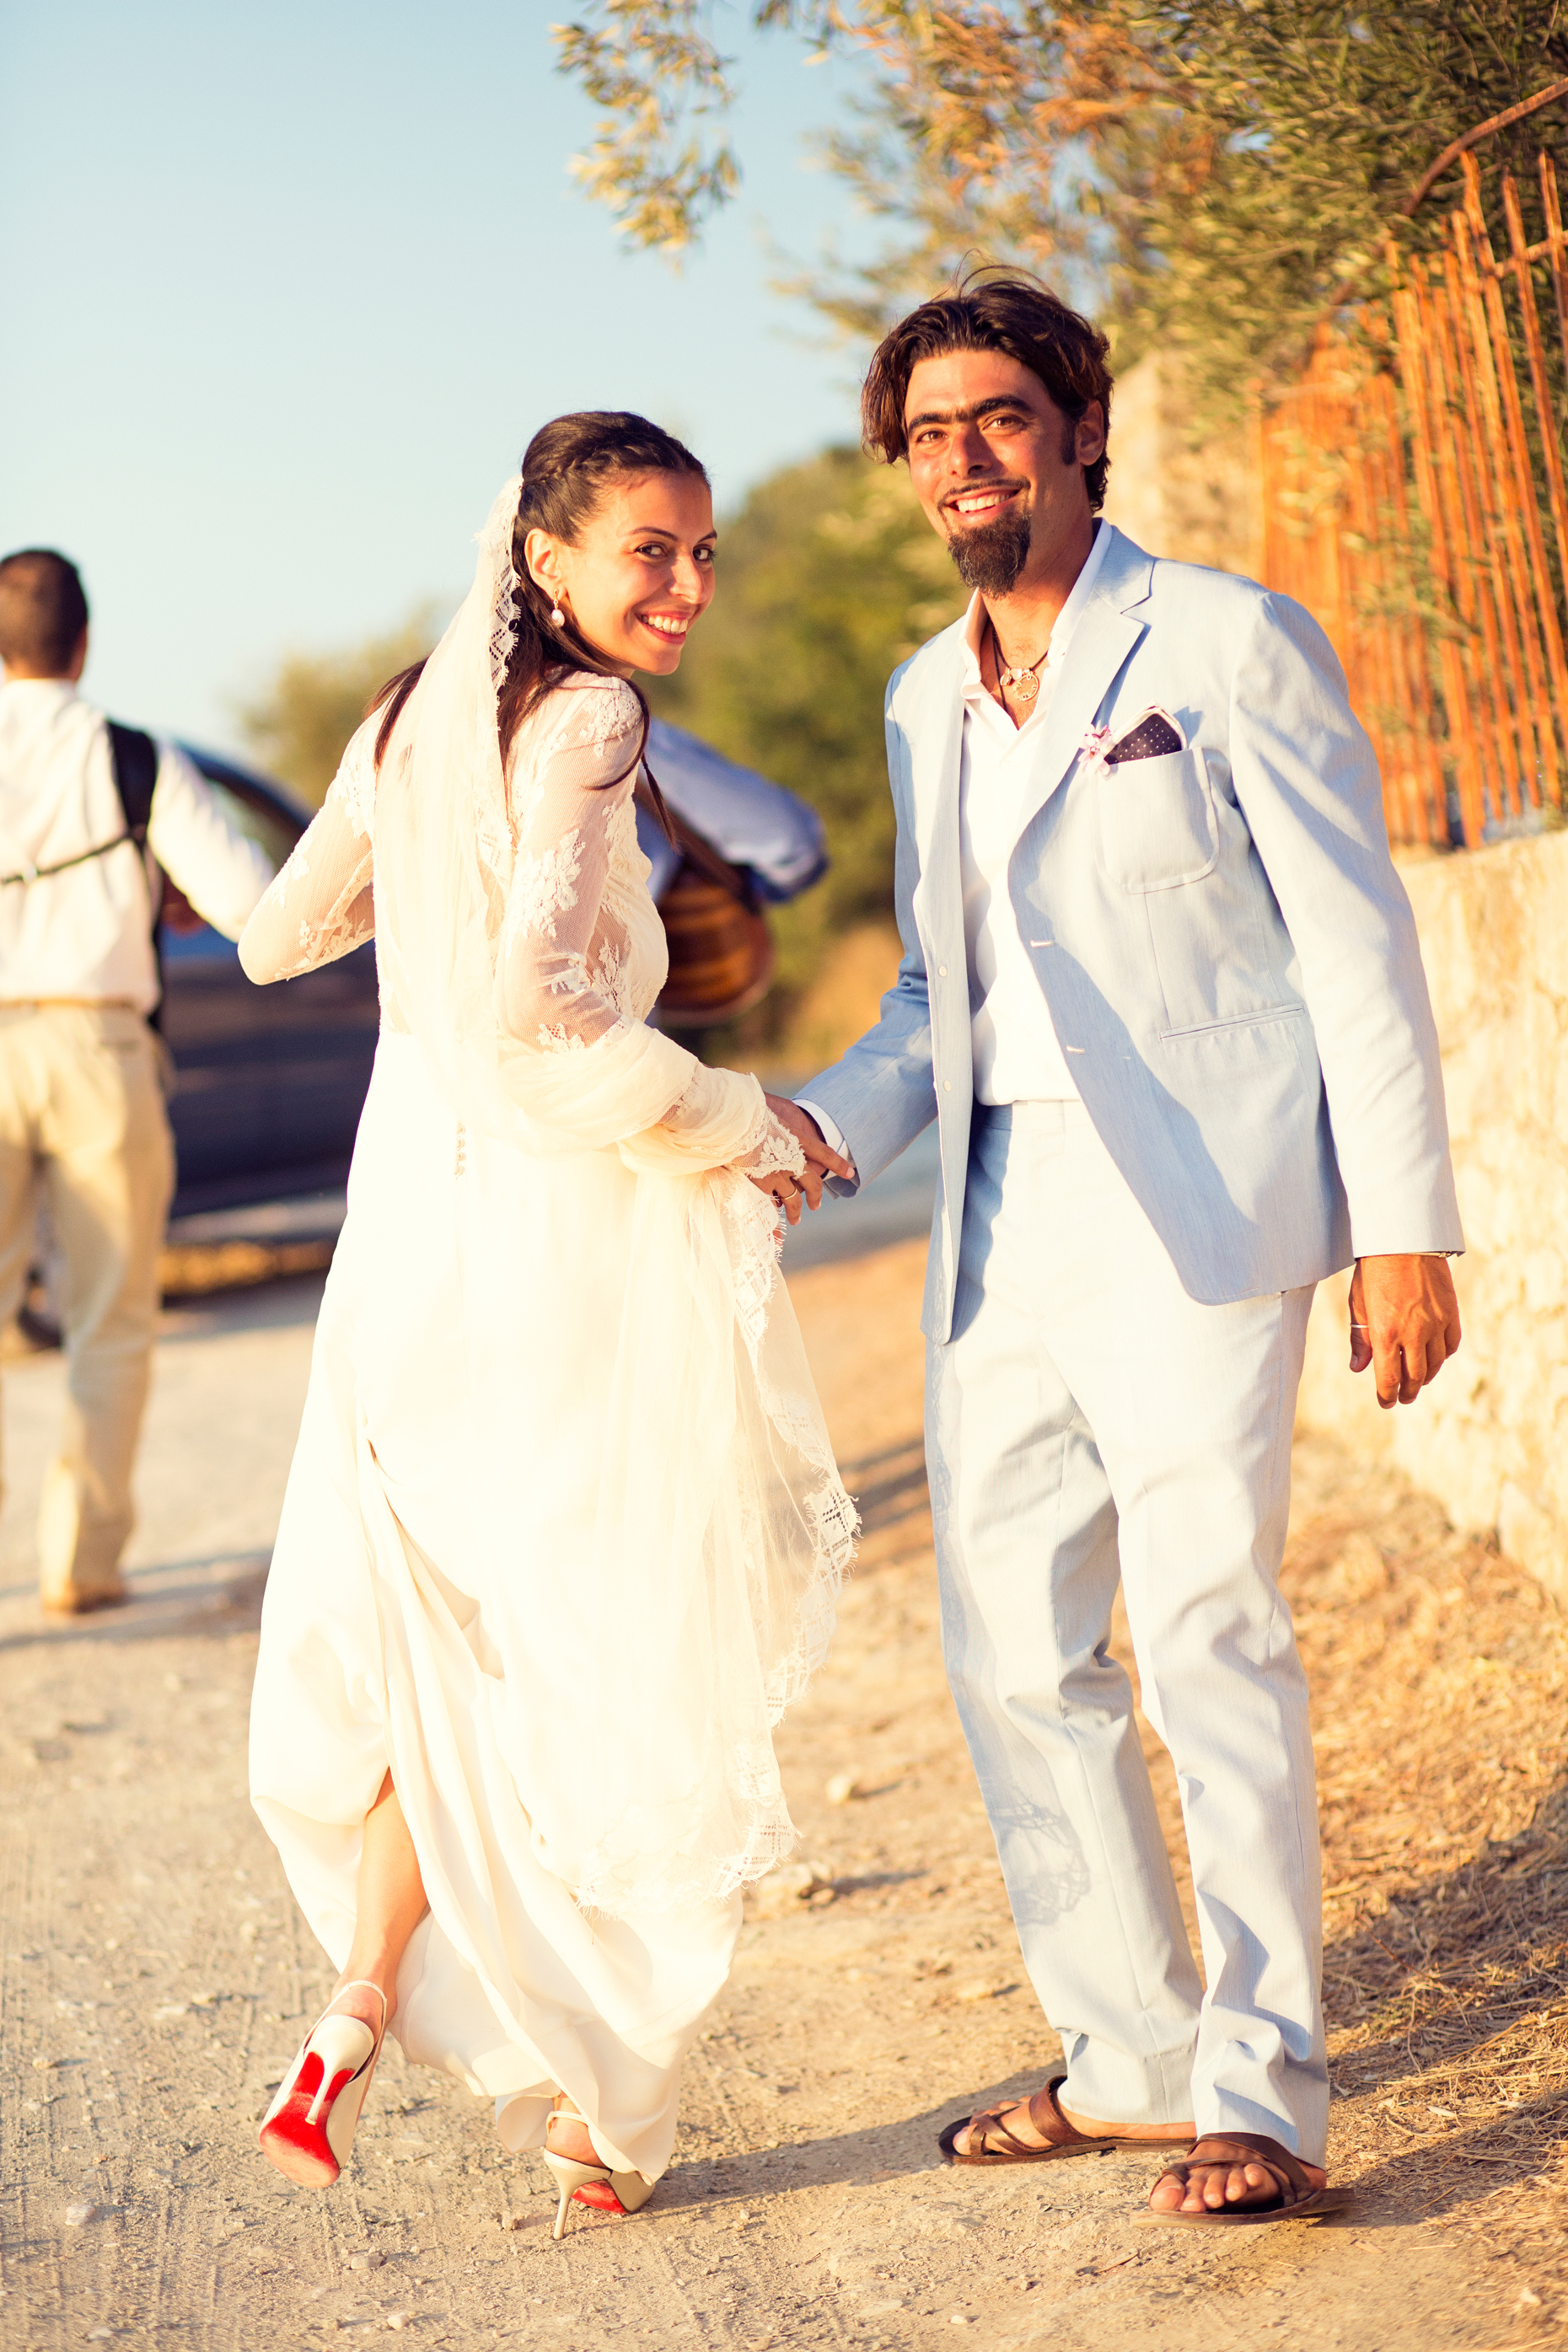 Destination Wedding Photography_Greece_JamiSaunders_033